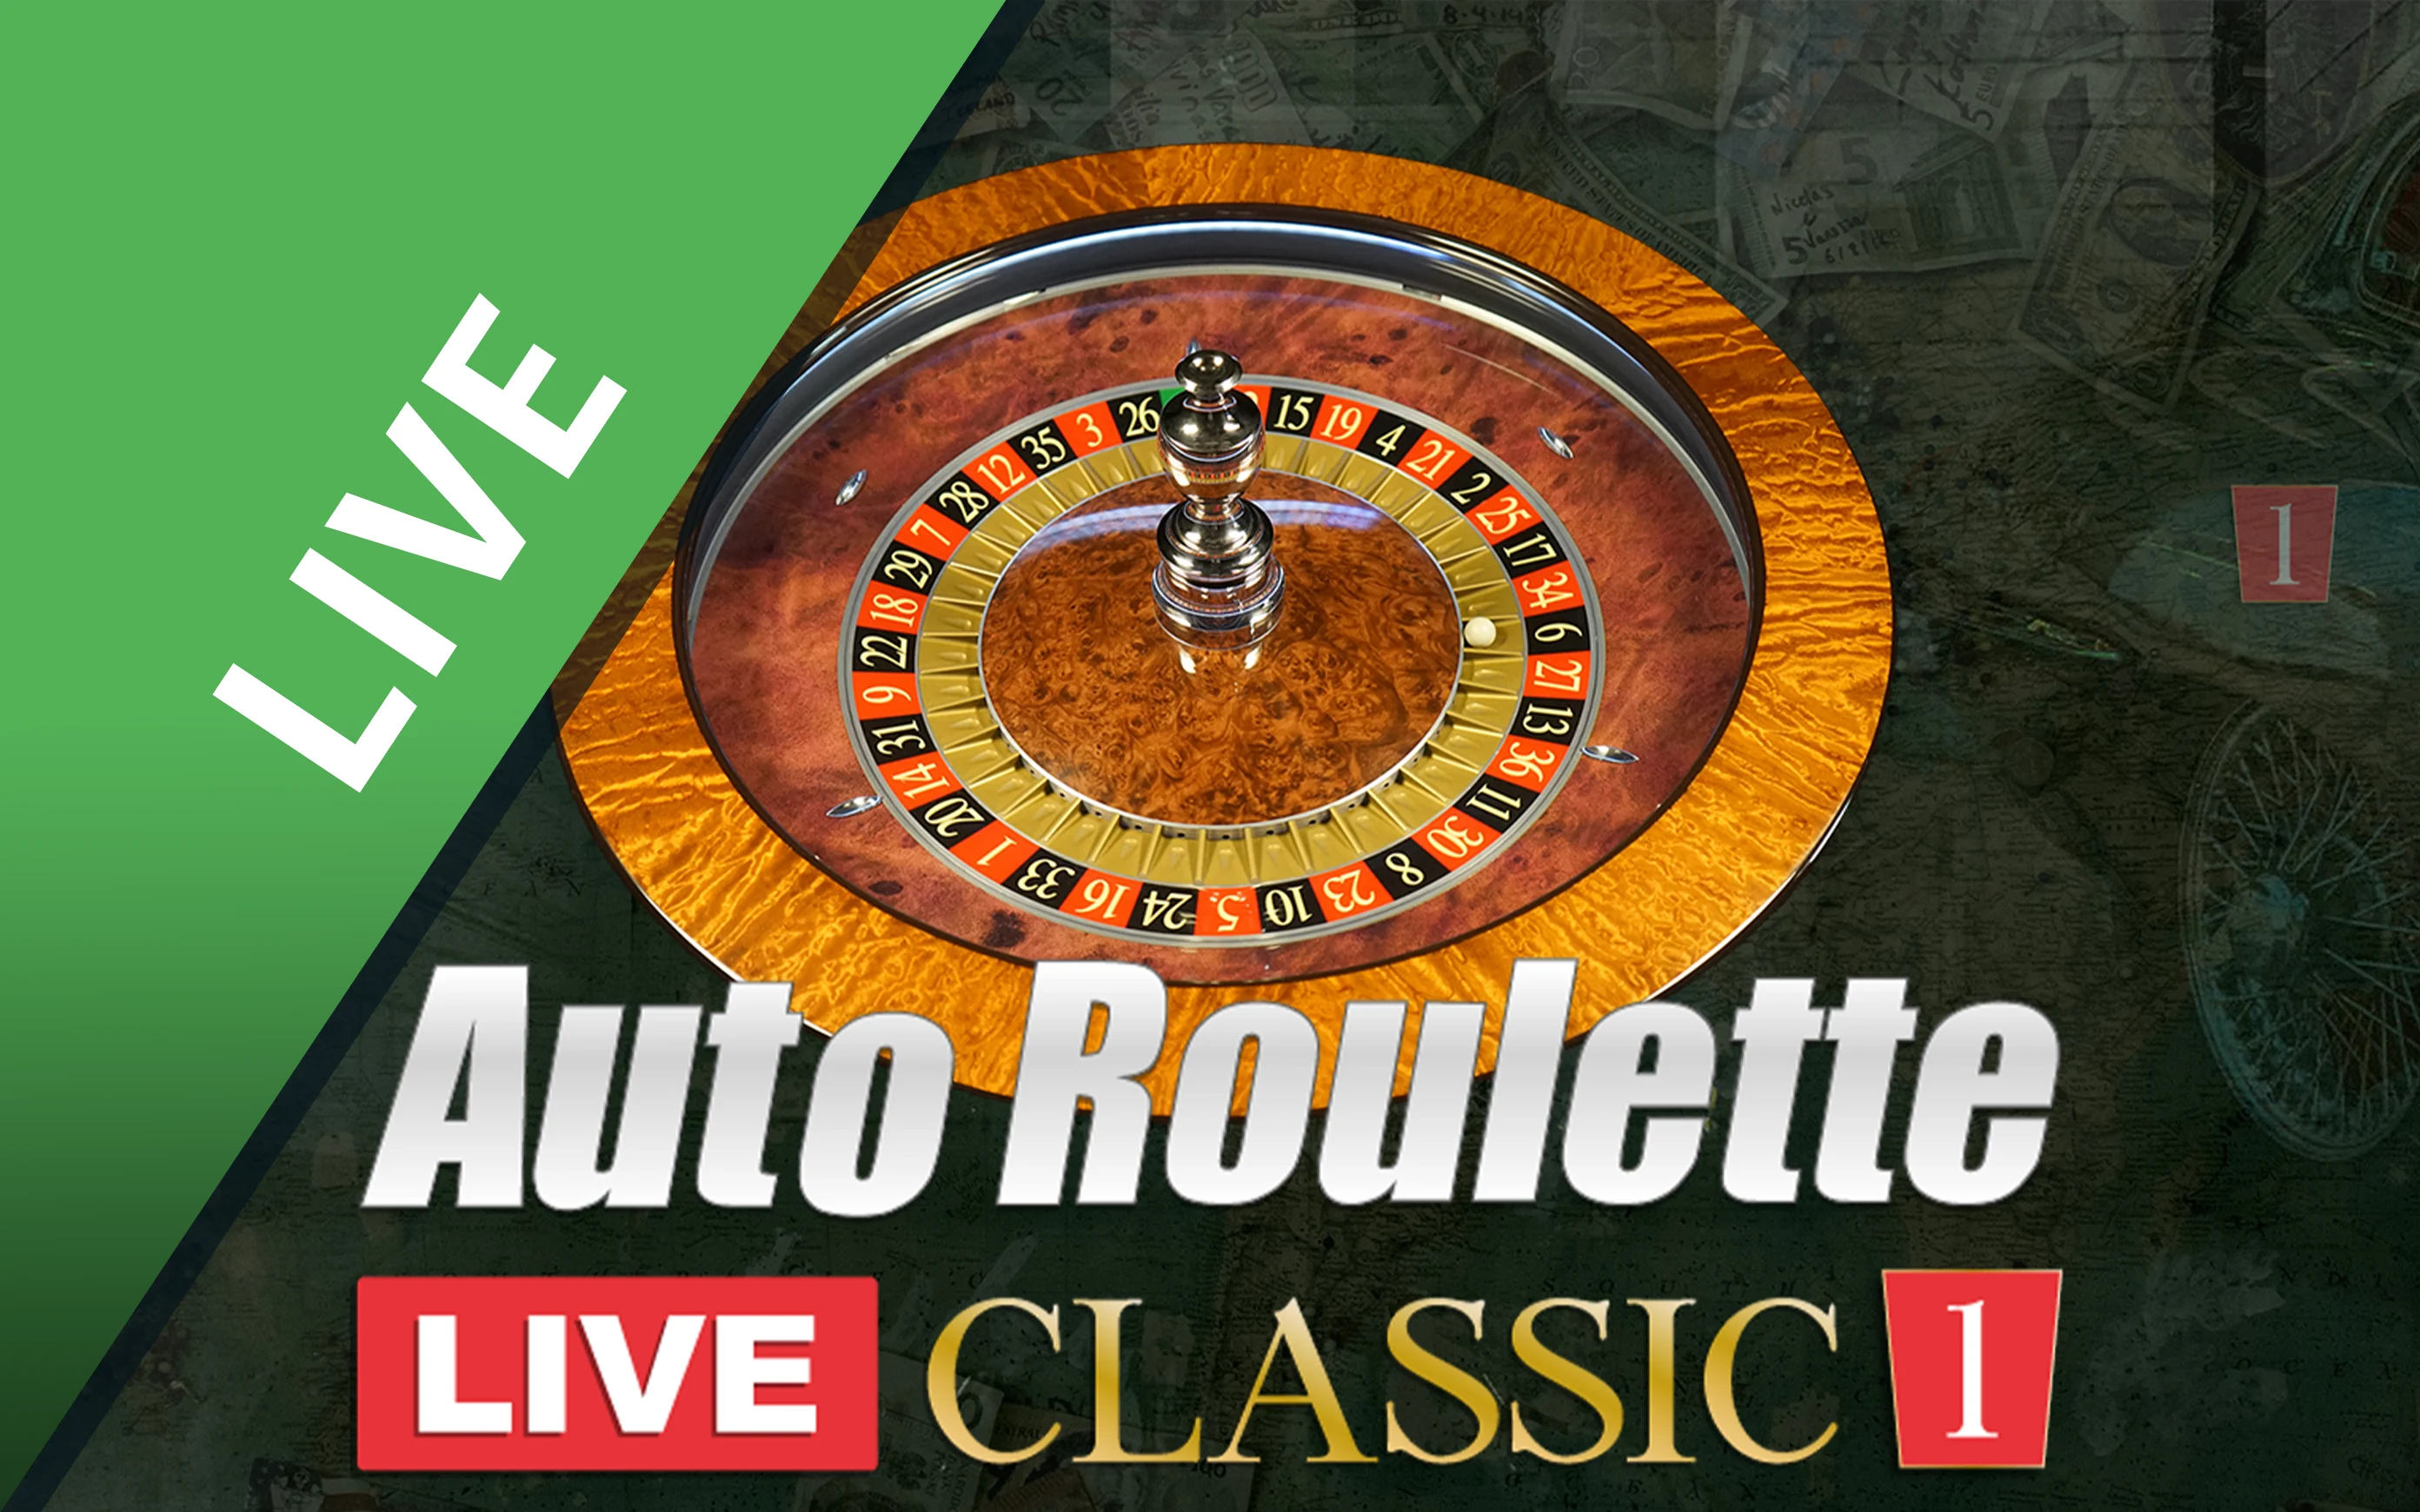 Starcasino.be online casino üzerinden Classic Roulette 1 oynayın